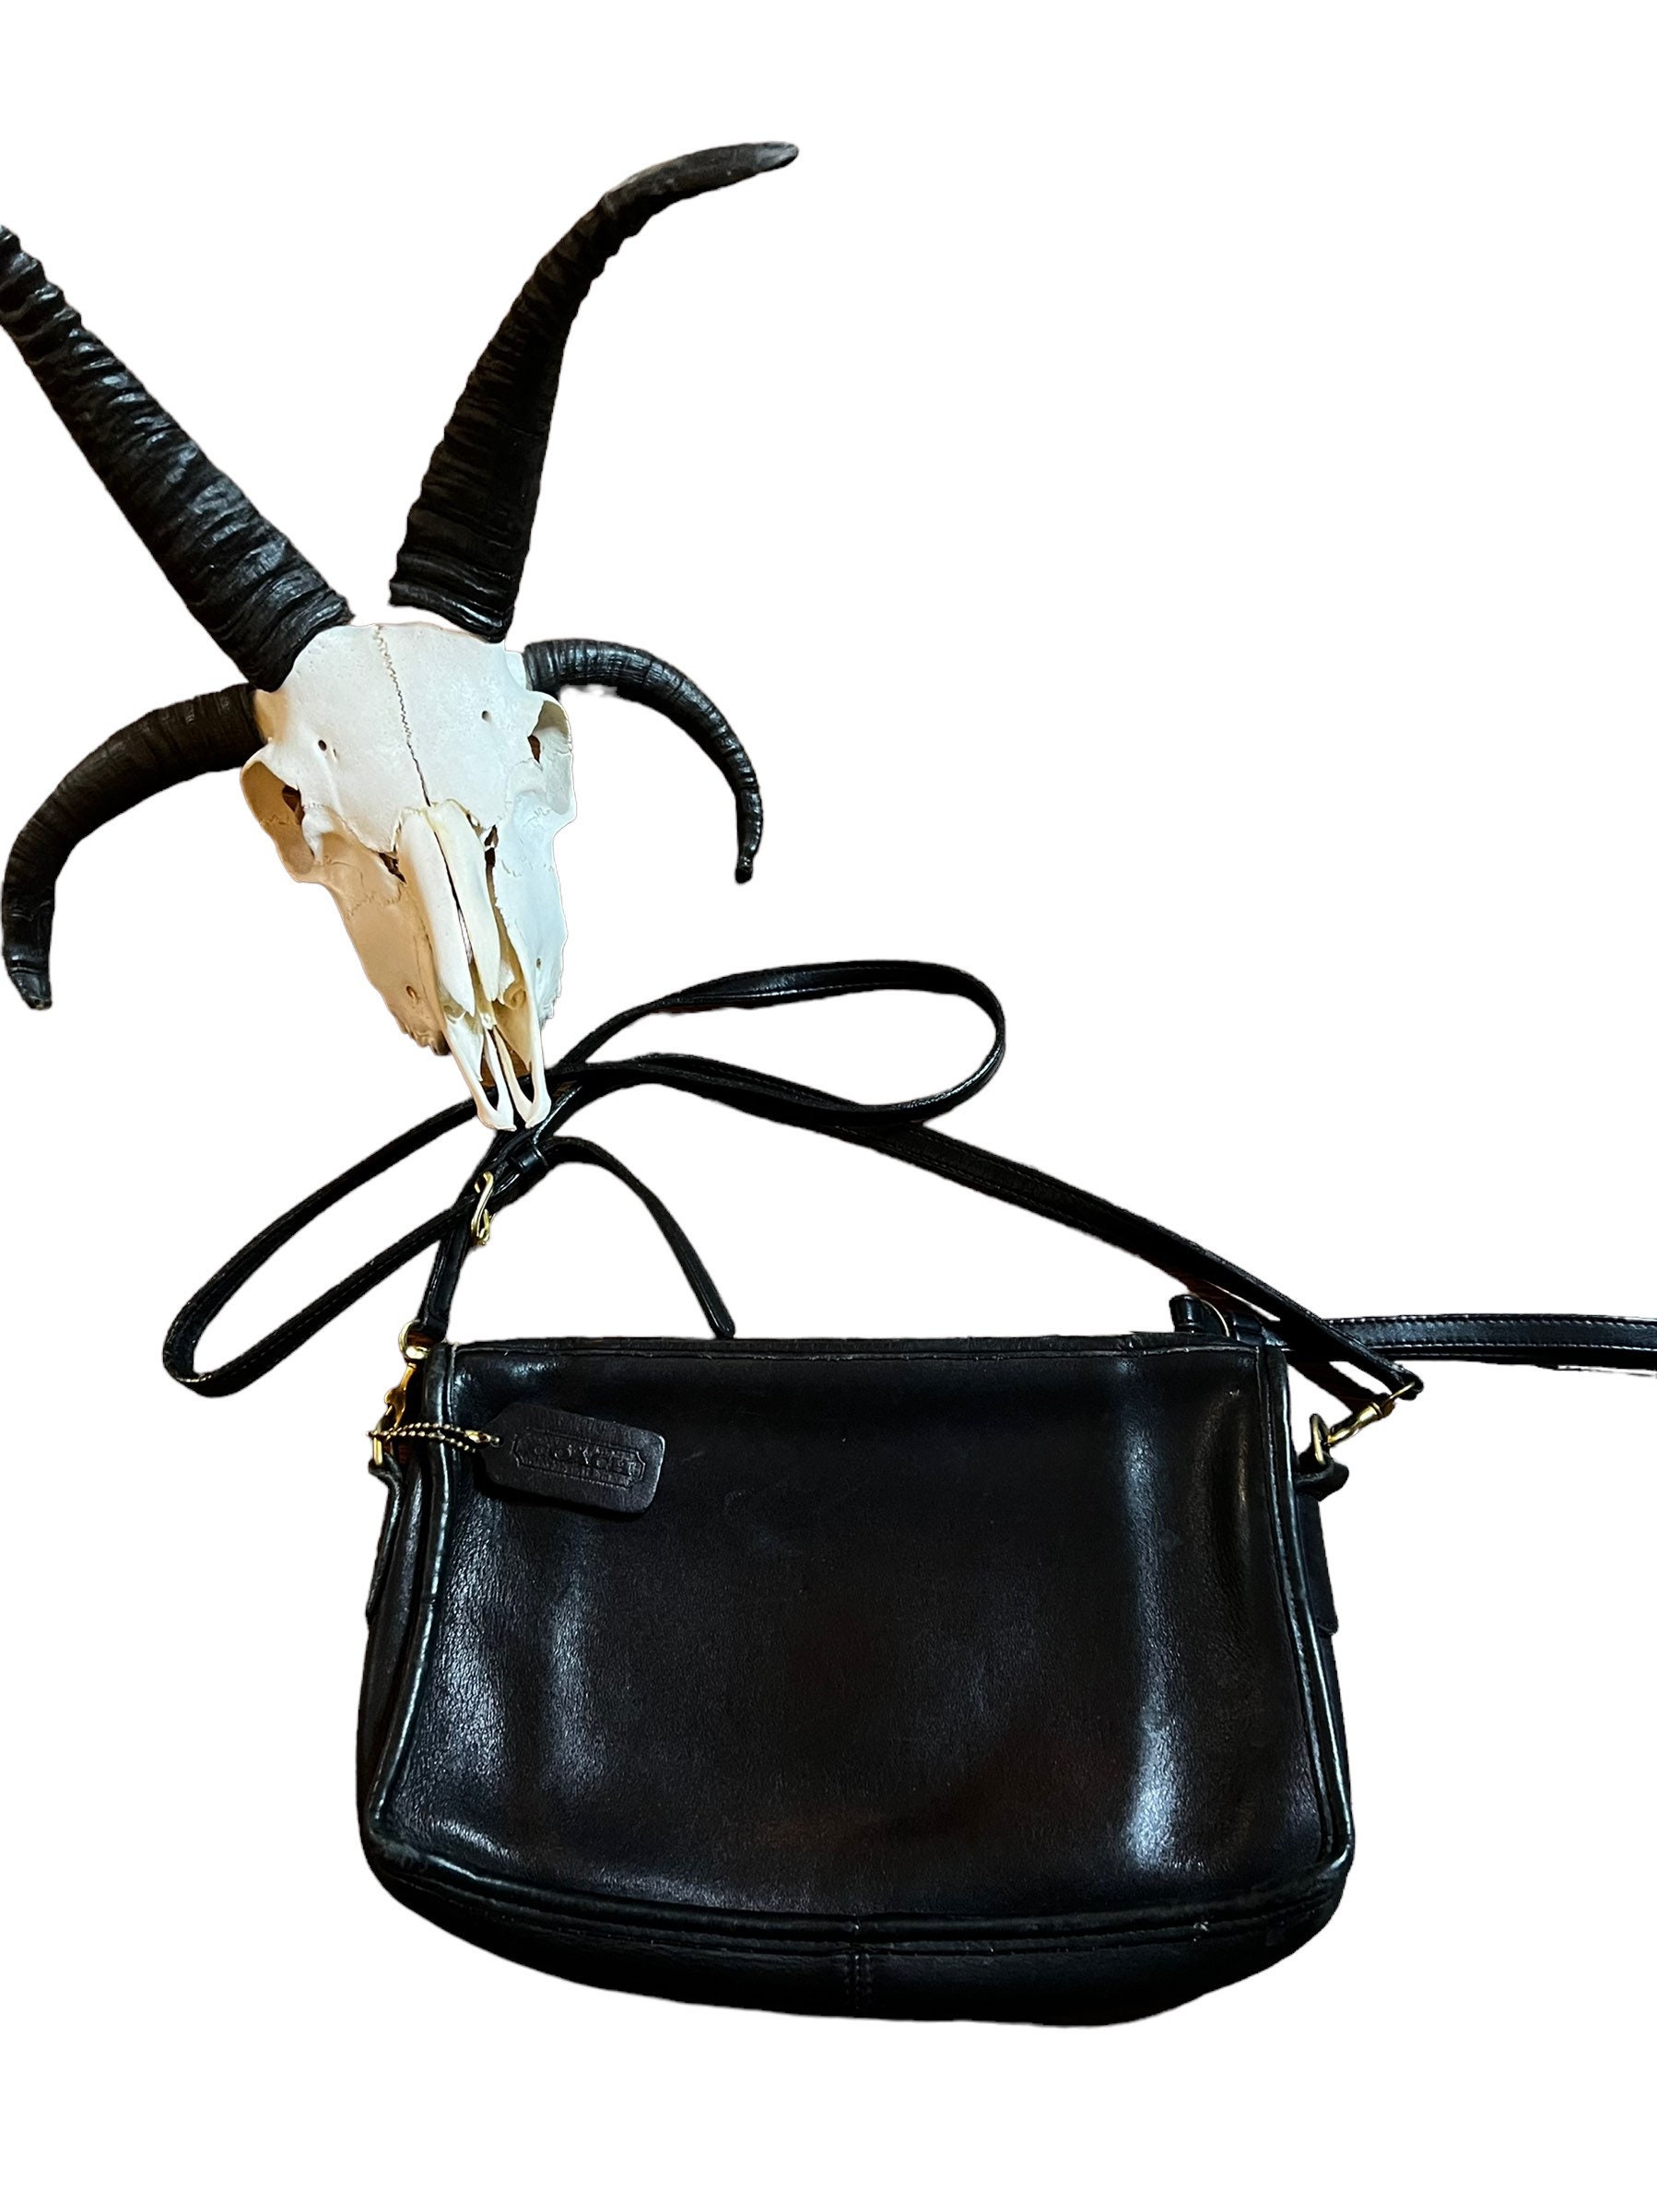 Coach C32-6351 Handbag Purse Small Black Monogram Shoulder Bag Purse  Leather | eBay